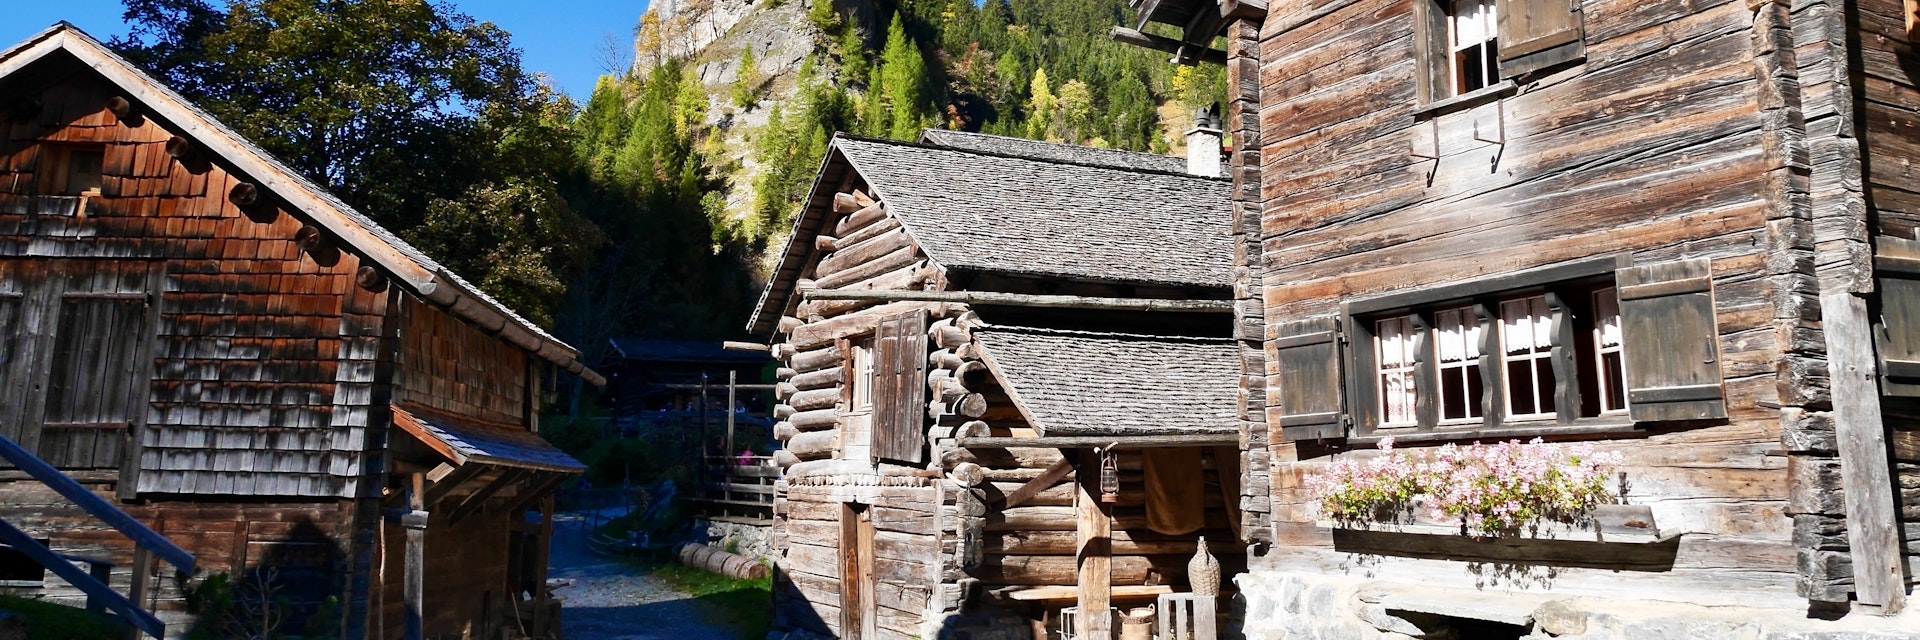 Typical wooden houses Sankt Martin, Walser settlement, in Calfeisental, Switzerland.